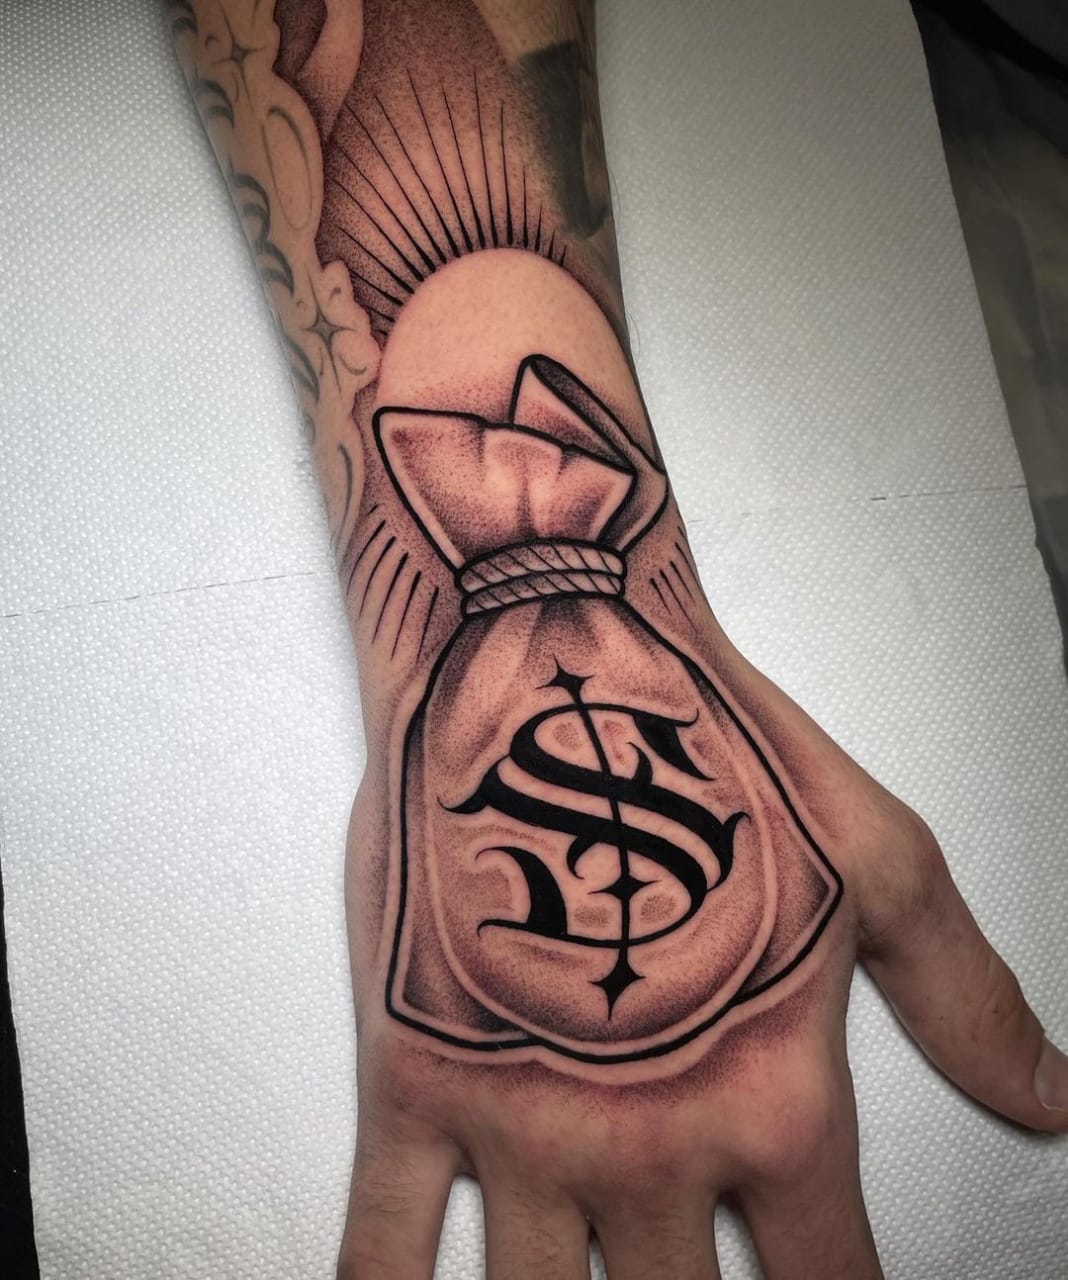 Money tattoo